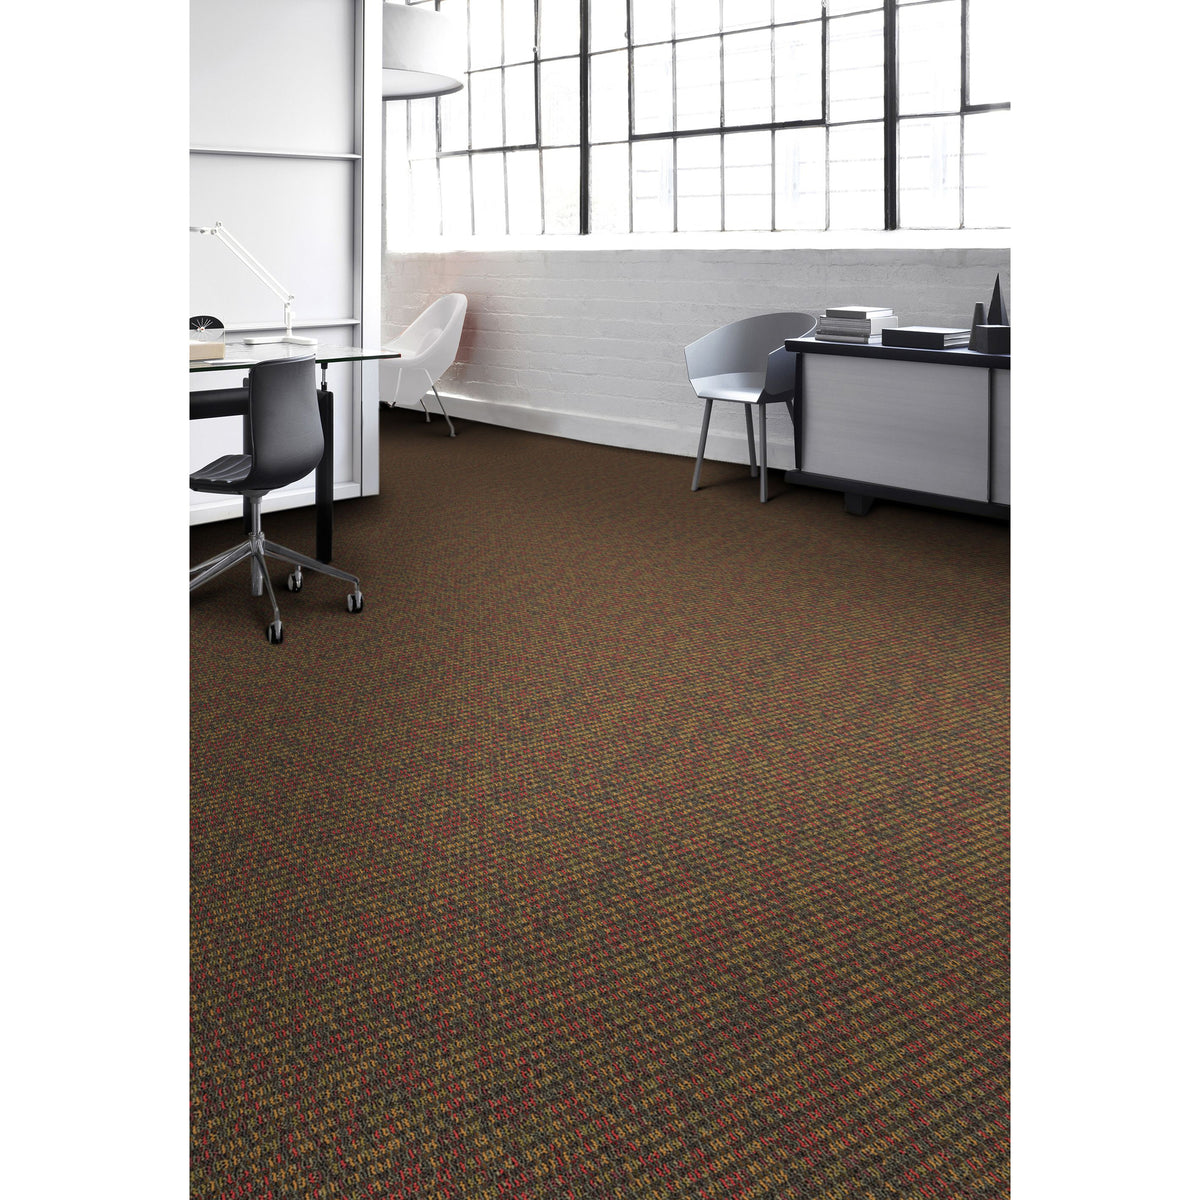 Aladdin Commercial - Define Collection - Implore - Carpet Tile - Designate Room Scene